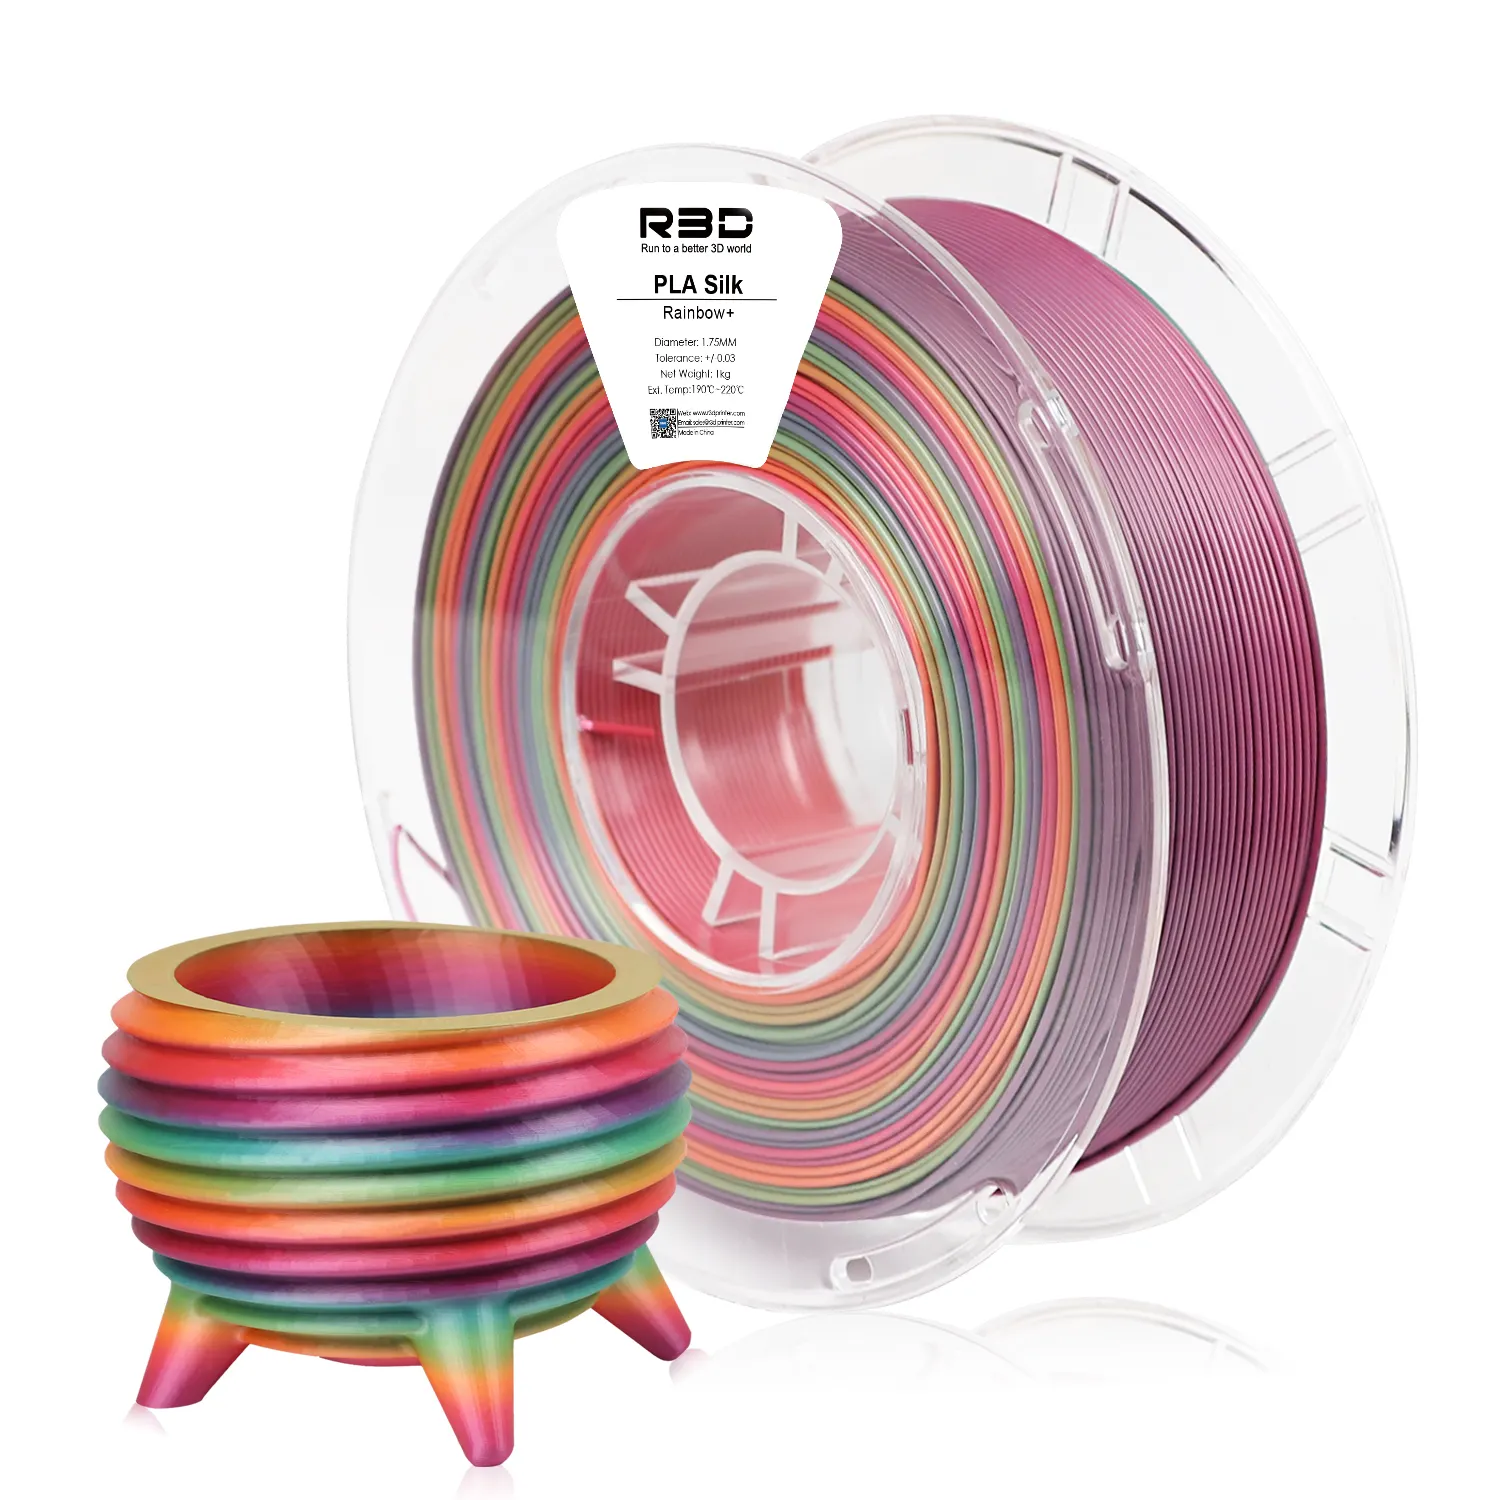 R3D Silk Rainbow Plus PLA Filament 1.75mm 1KG for 3D Printer With Clear Spool